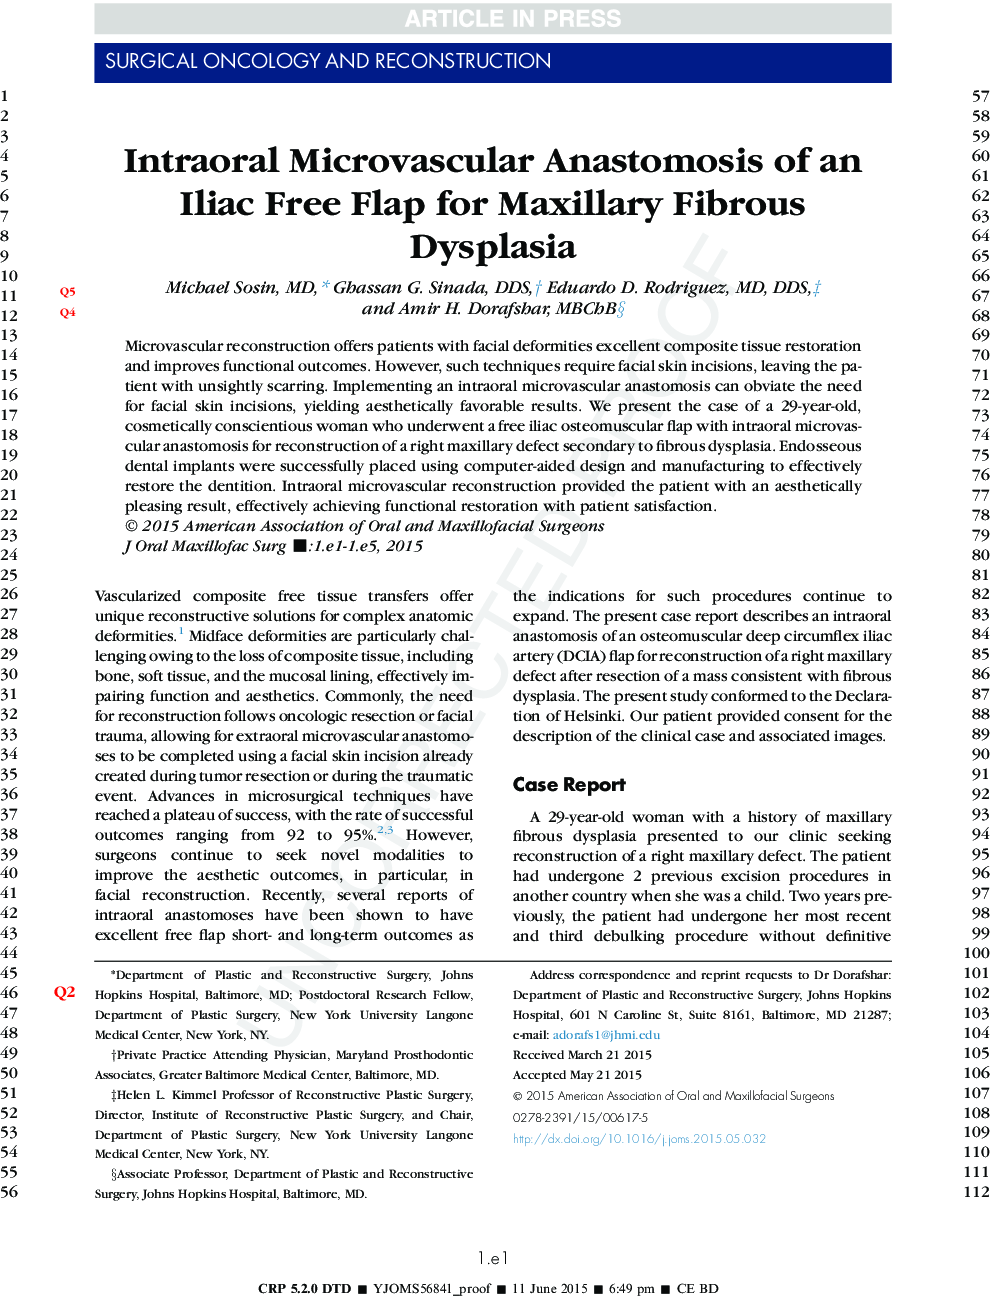 Intraoral Microvascular Anastomosis of an Iliac Free Flap for Maxillary Fibrous Dysplasia